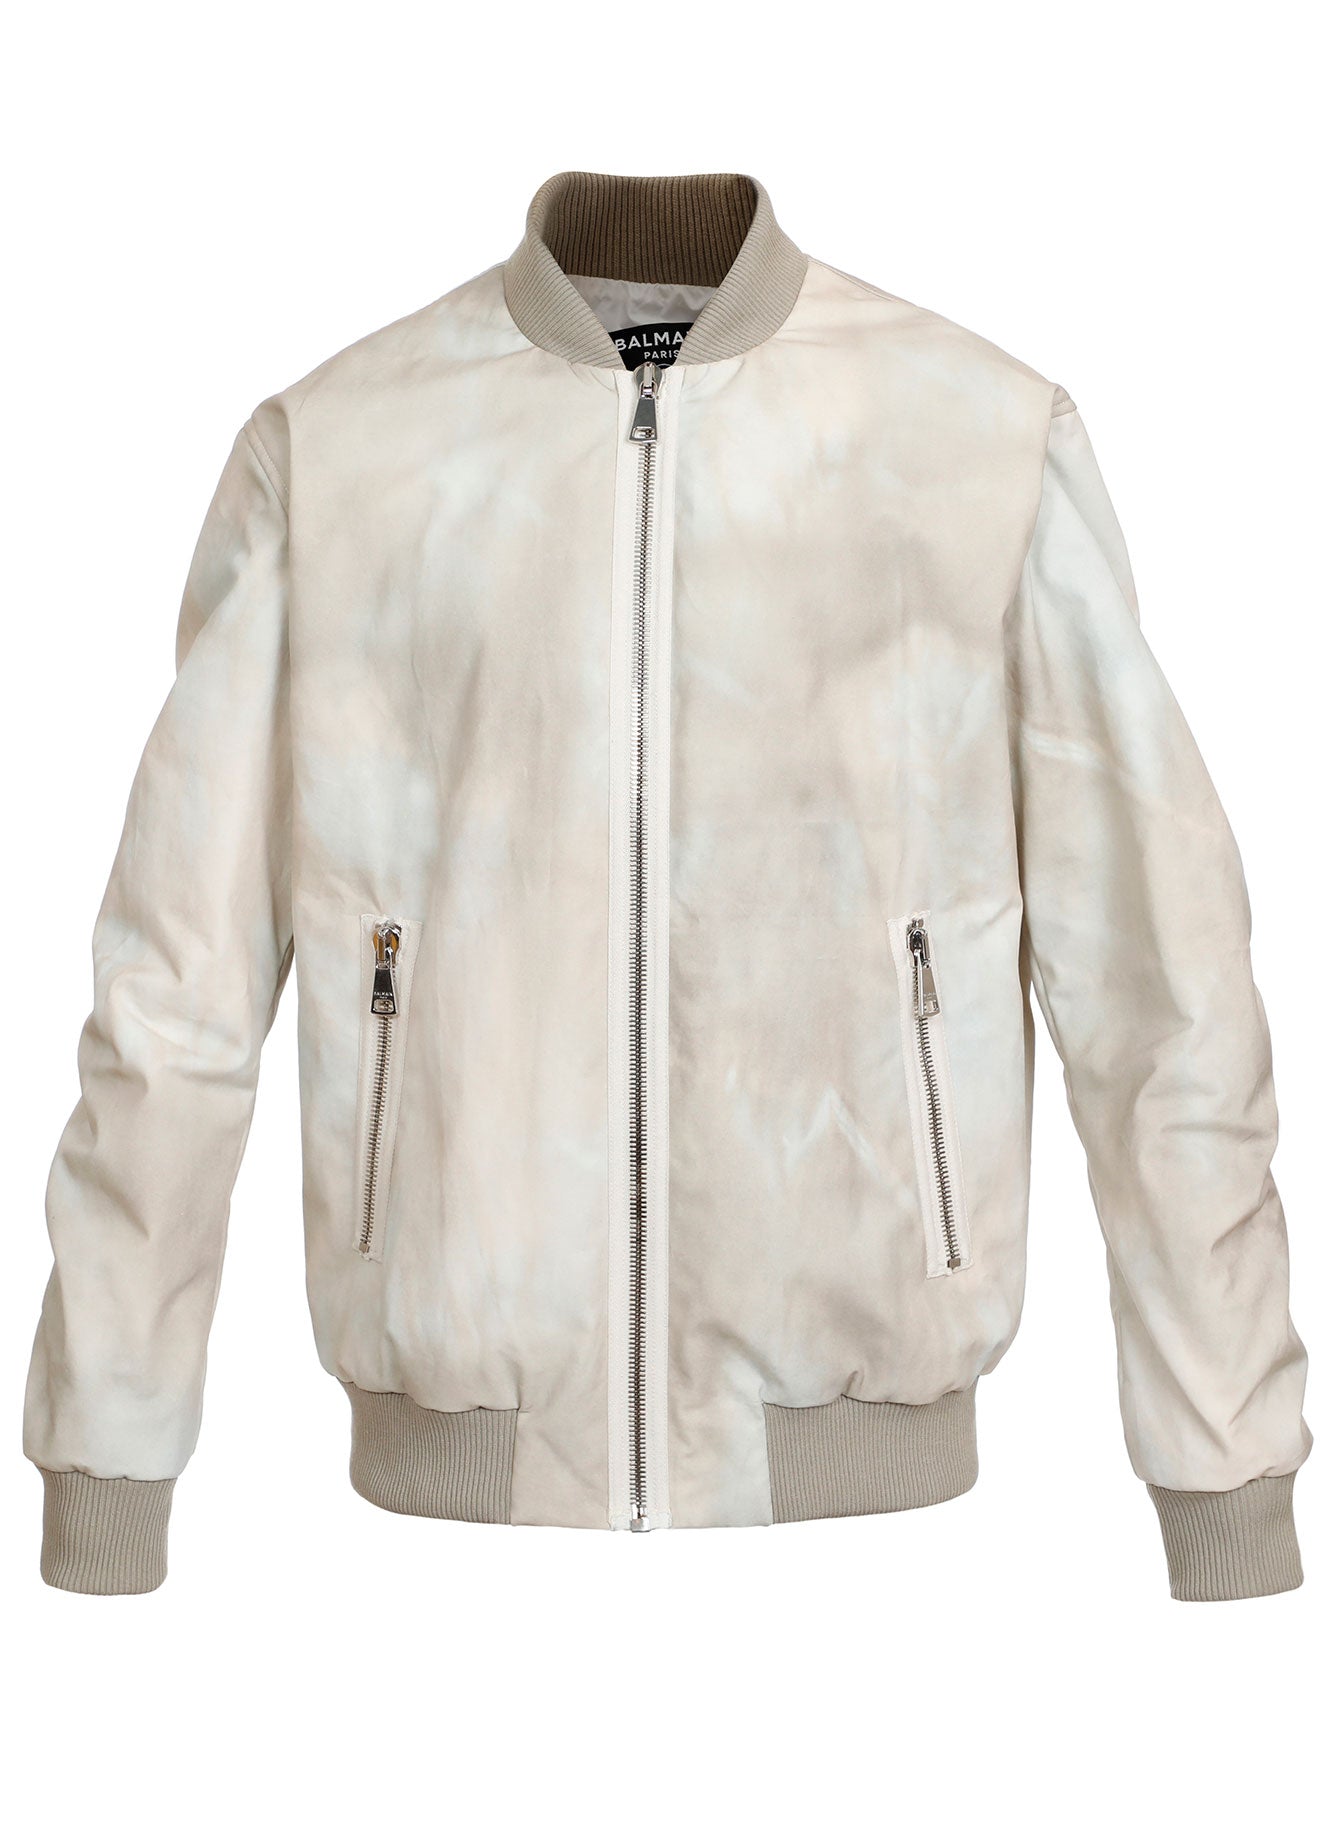 Balmain Leather Biker Jacket in White